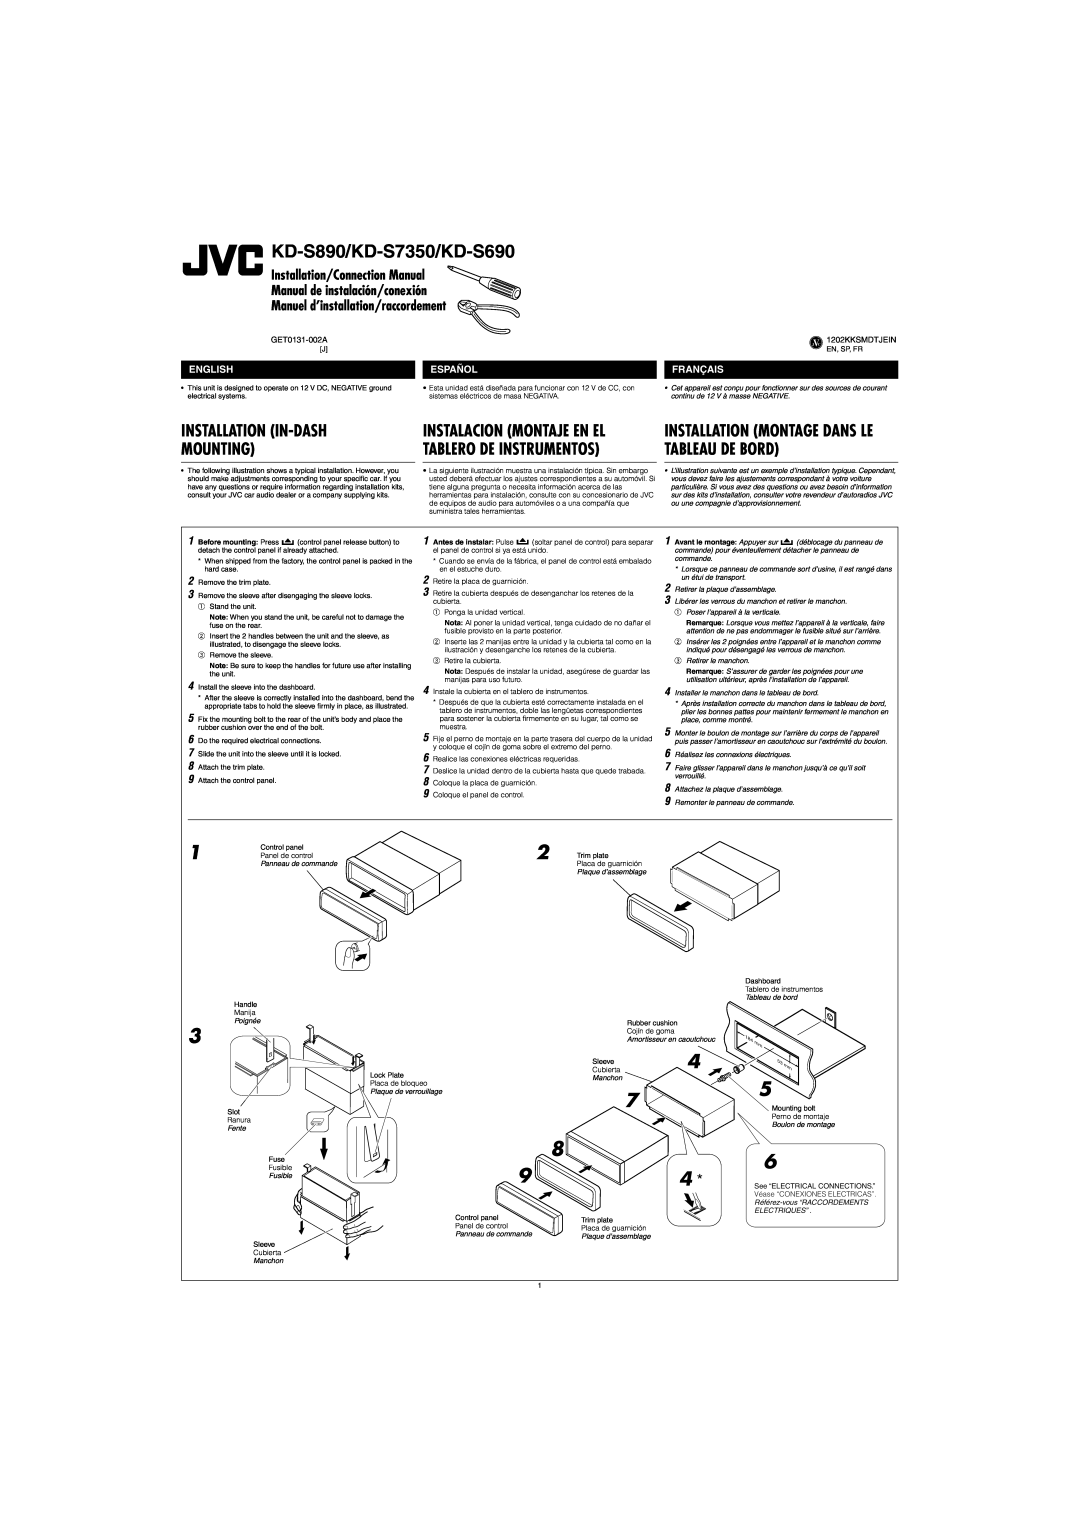 JVC manual Installation In-Dash Mounting, Tableau De Bord, KD-S890/KD-S7350/KD-S690 